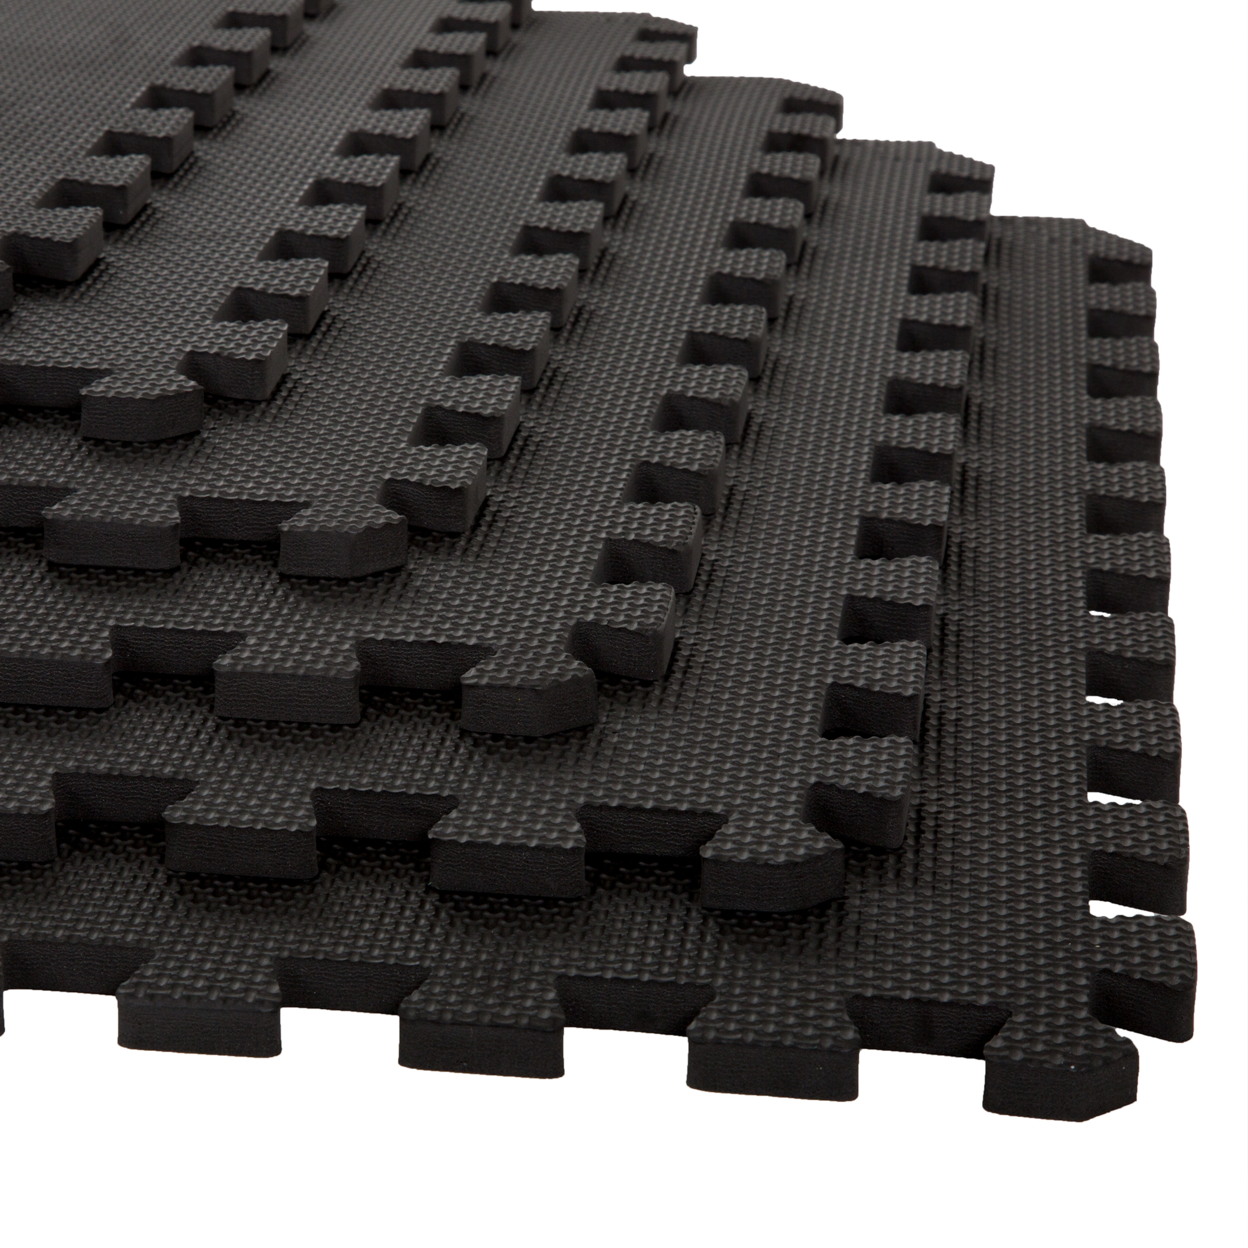 6 Pk Interlocking EVA Foam Floor Mats Garage Flooring Basement Exercise Mat 24 X 24 Inches Each